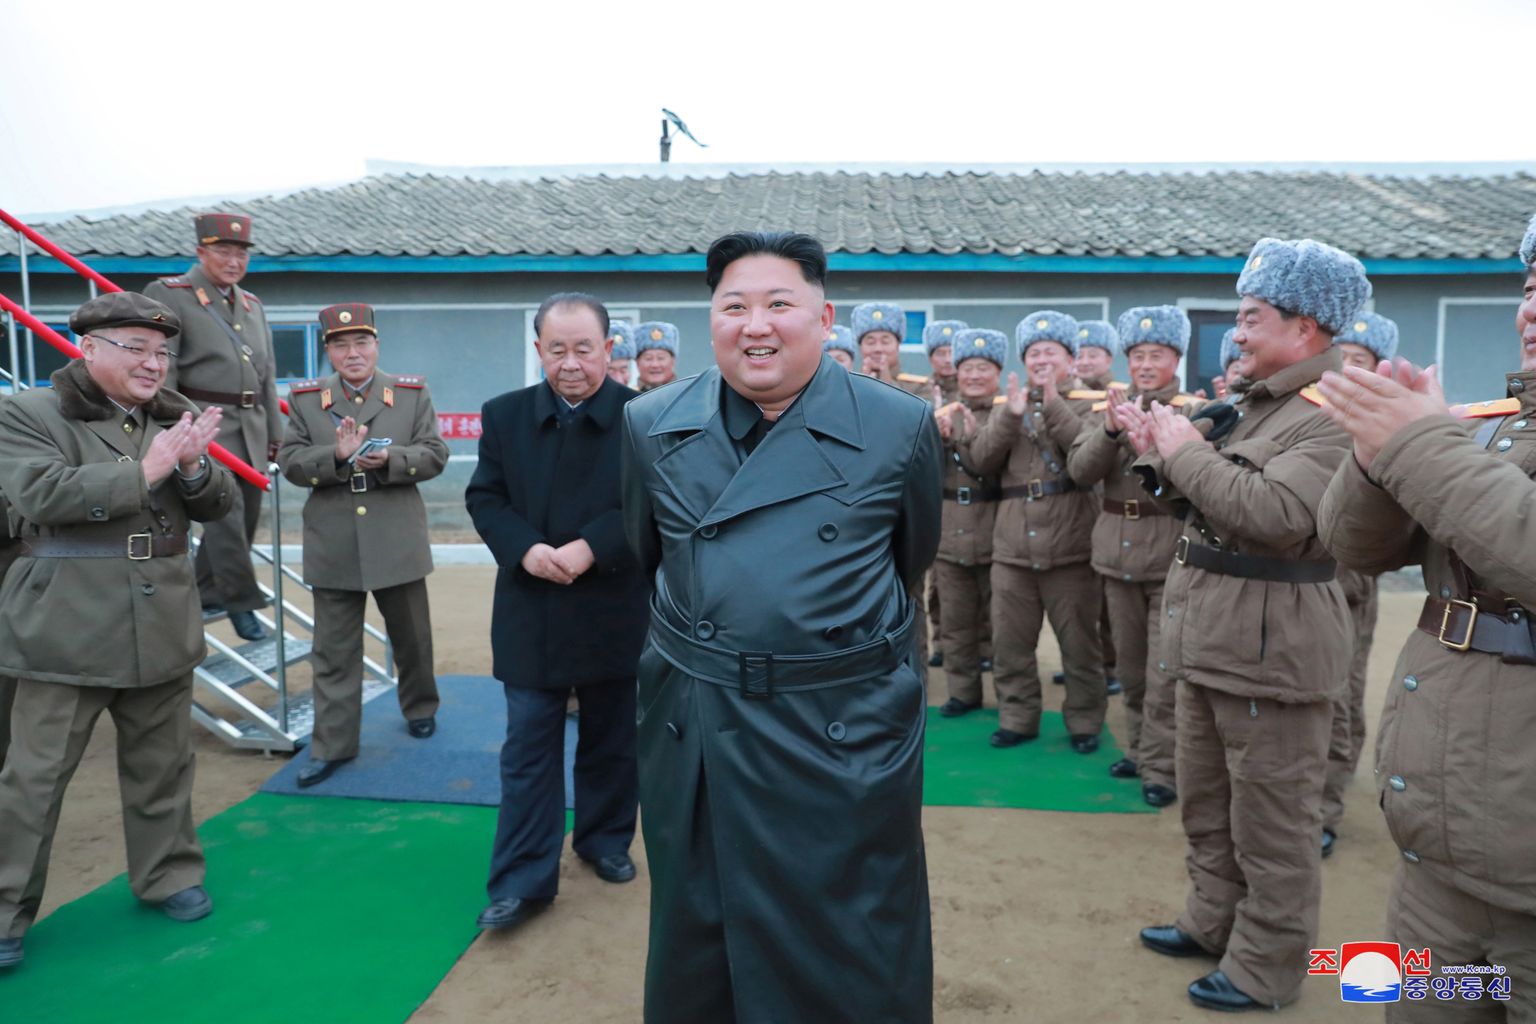 Põhja-Korea diktaator Kim Jong-un (keskel) jälgimas raketikatsetust.